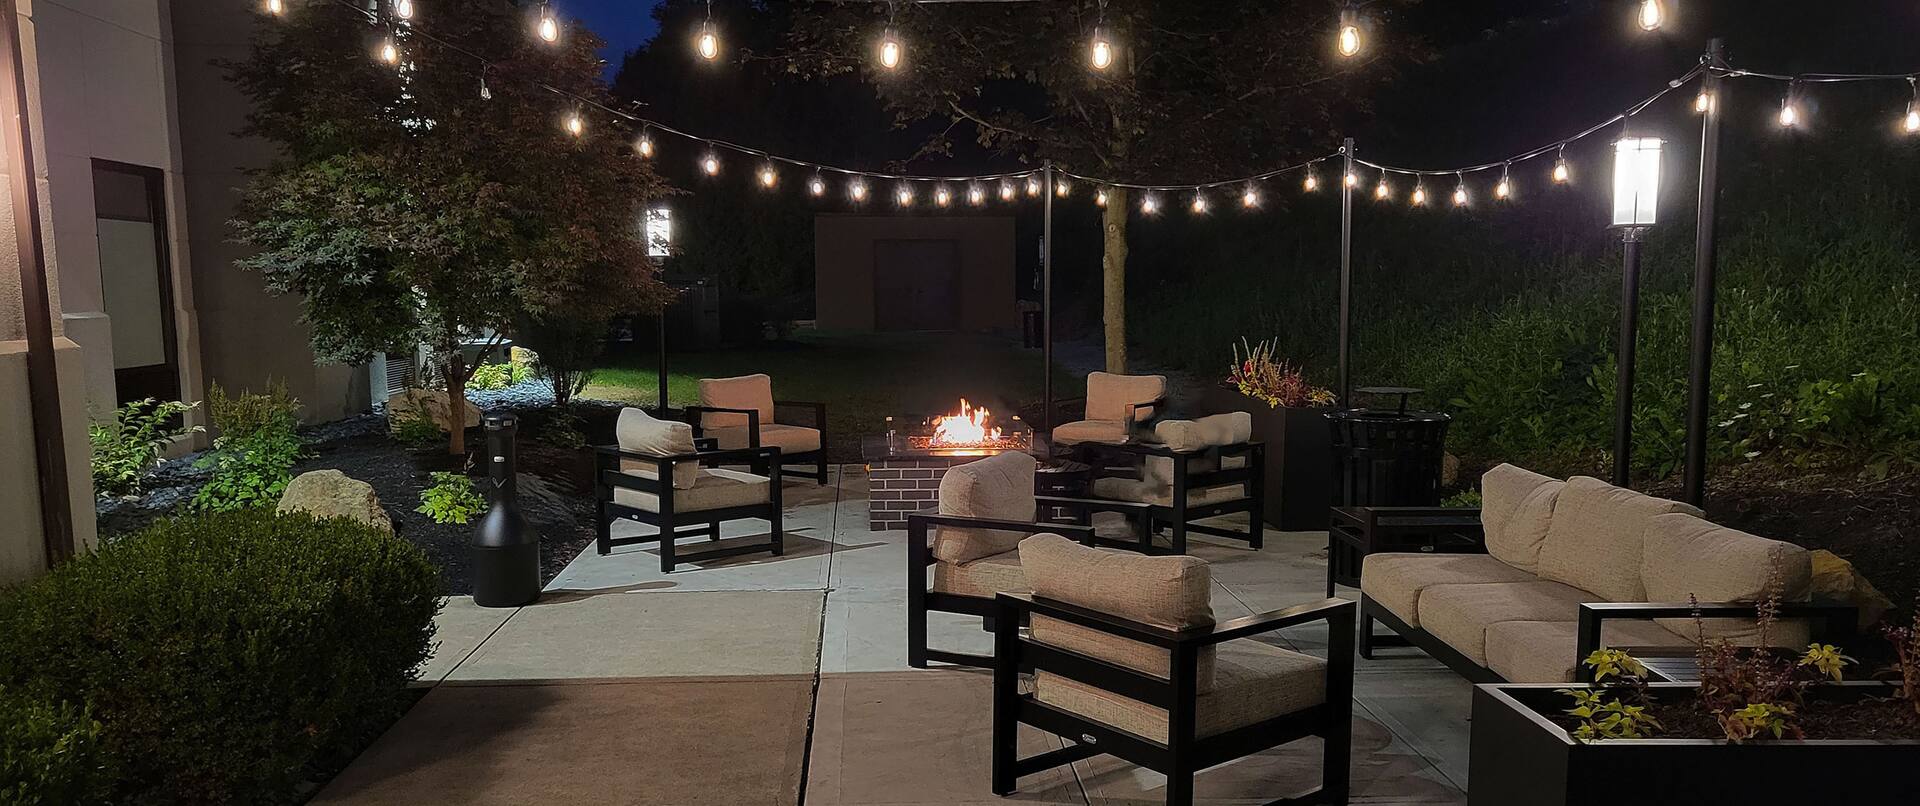 outdoor patio at night